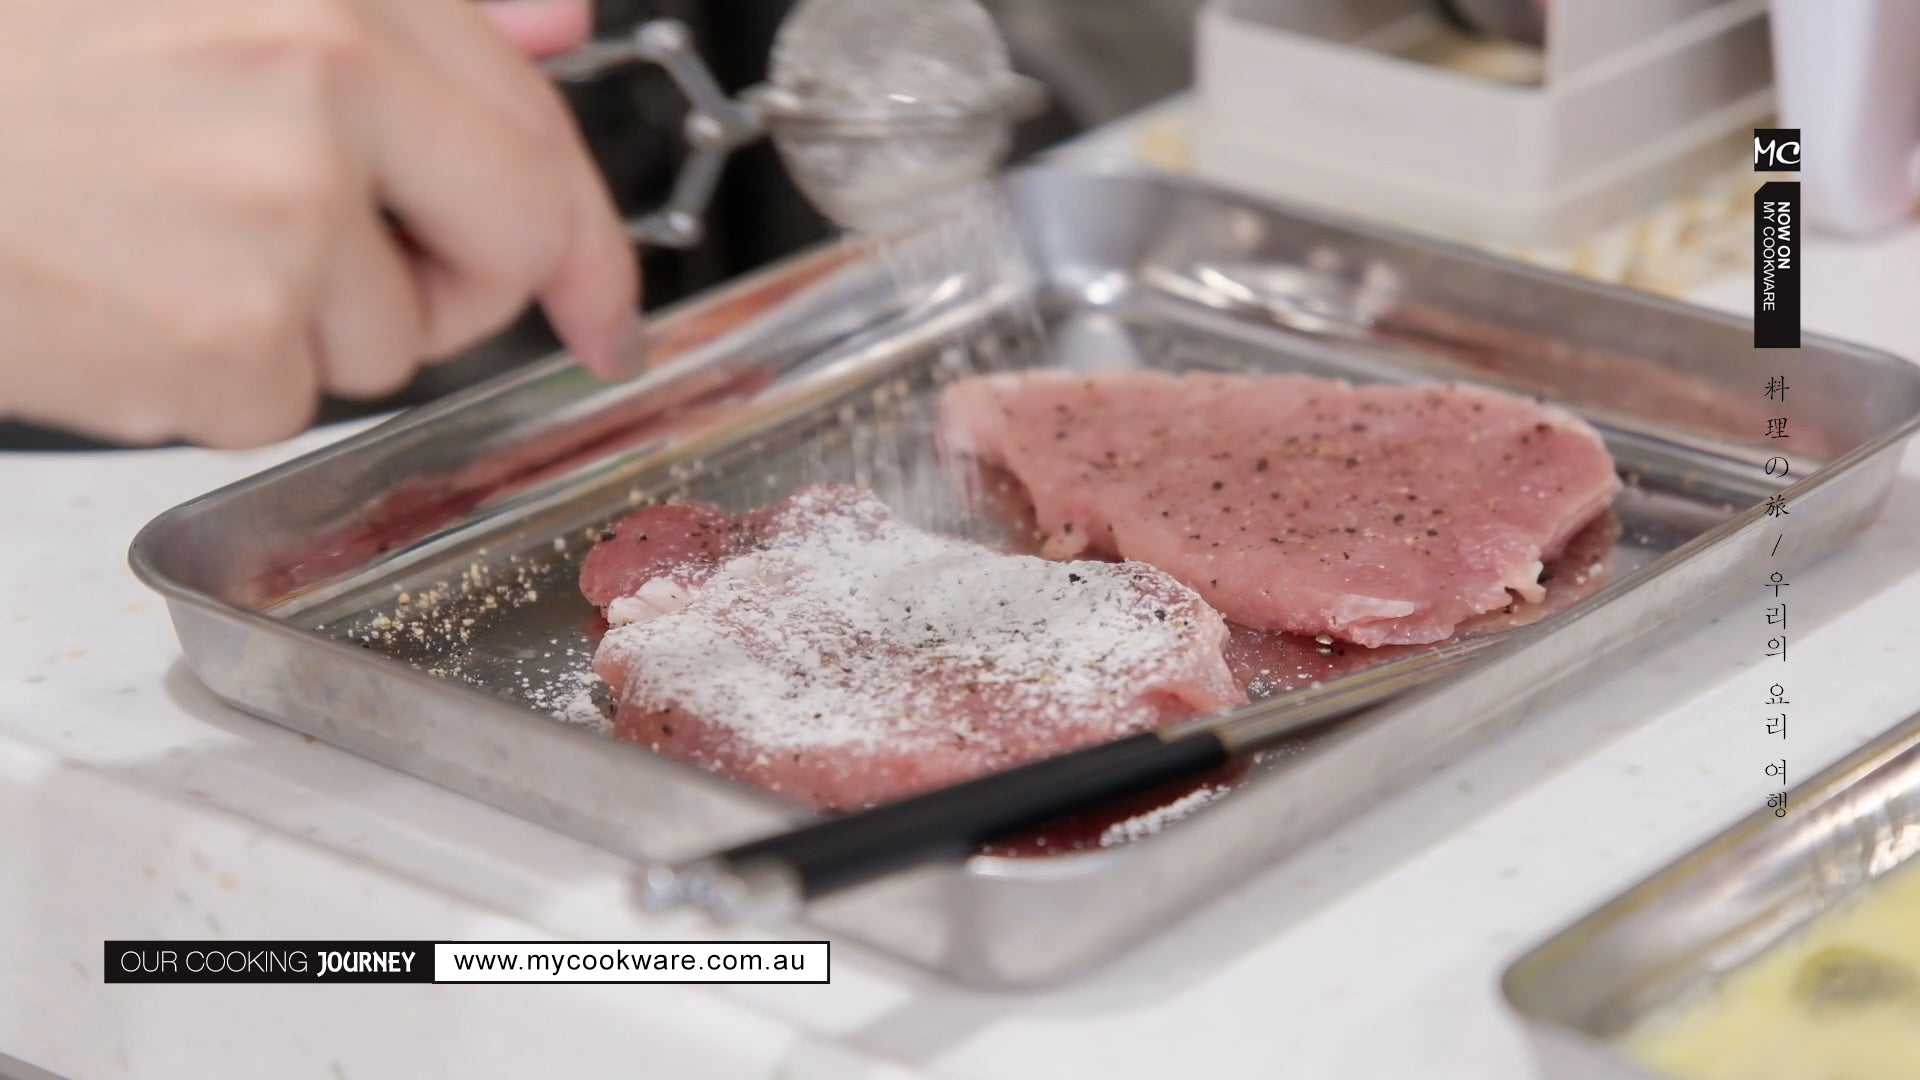 Cover the pork chop with flour.